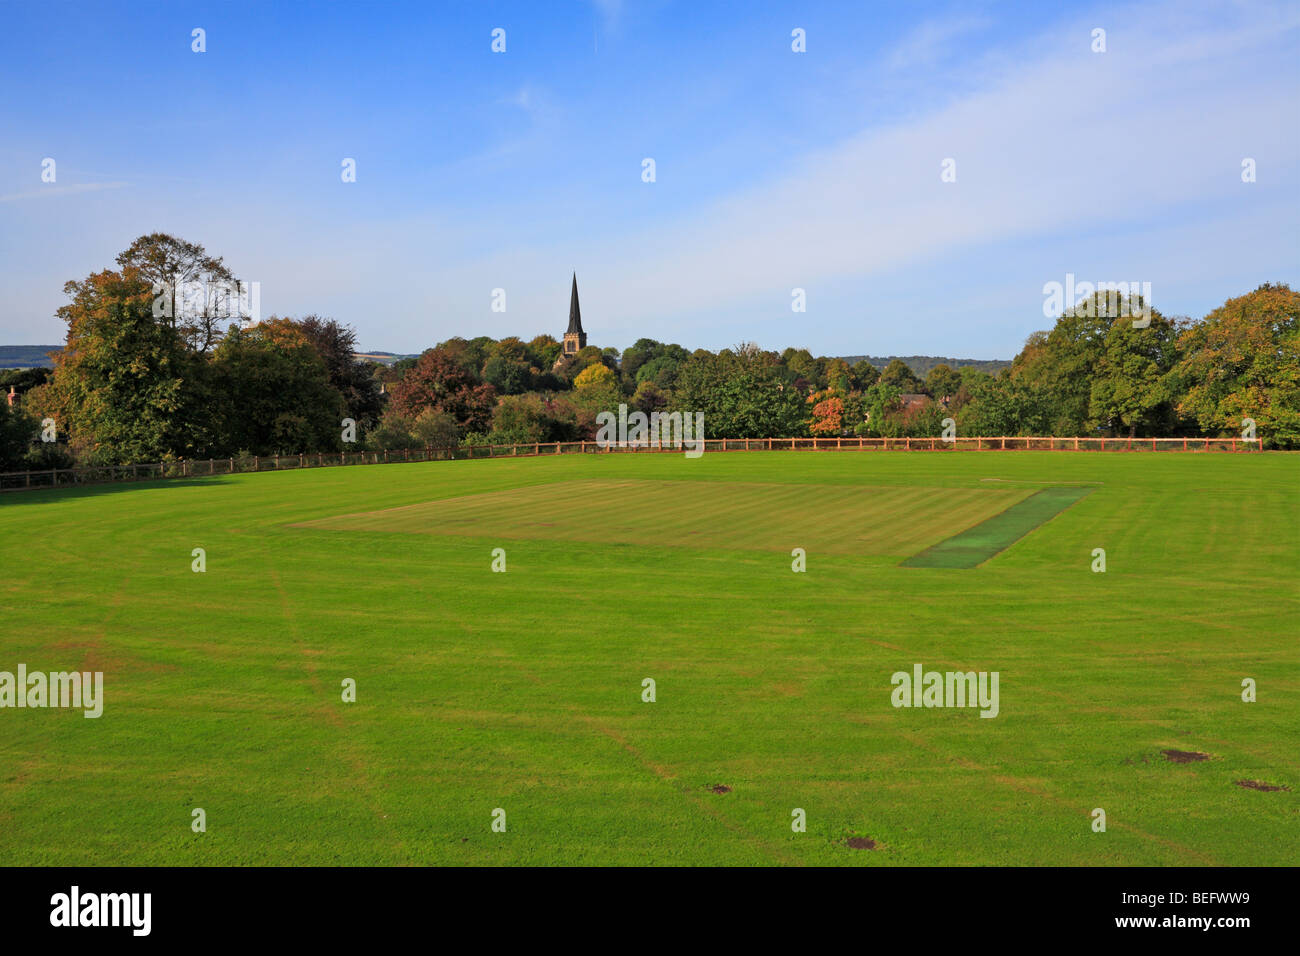 The cricket pitch towards Holy Trinity Church, Wentworth, Rotherham, South Yorkshire, England UK. Stock Photo